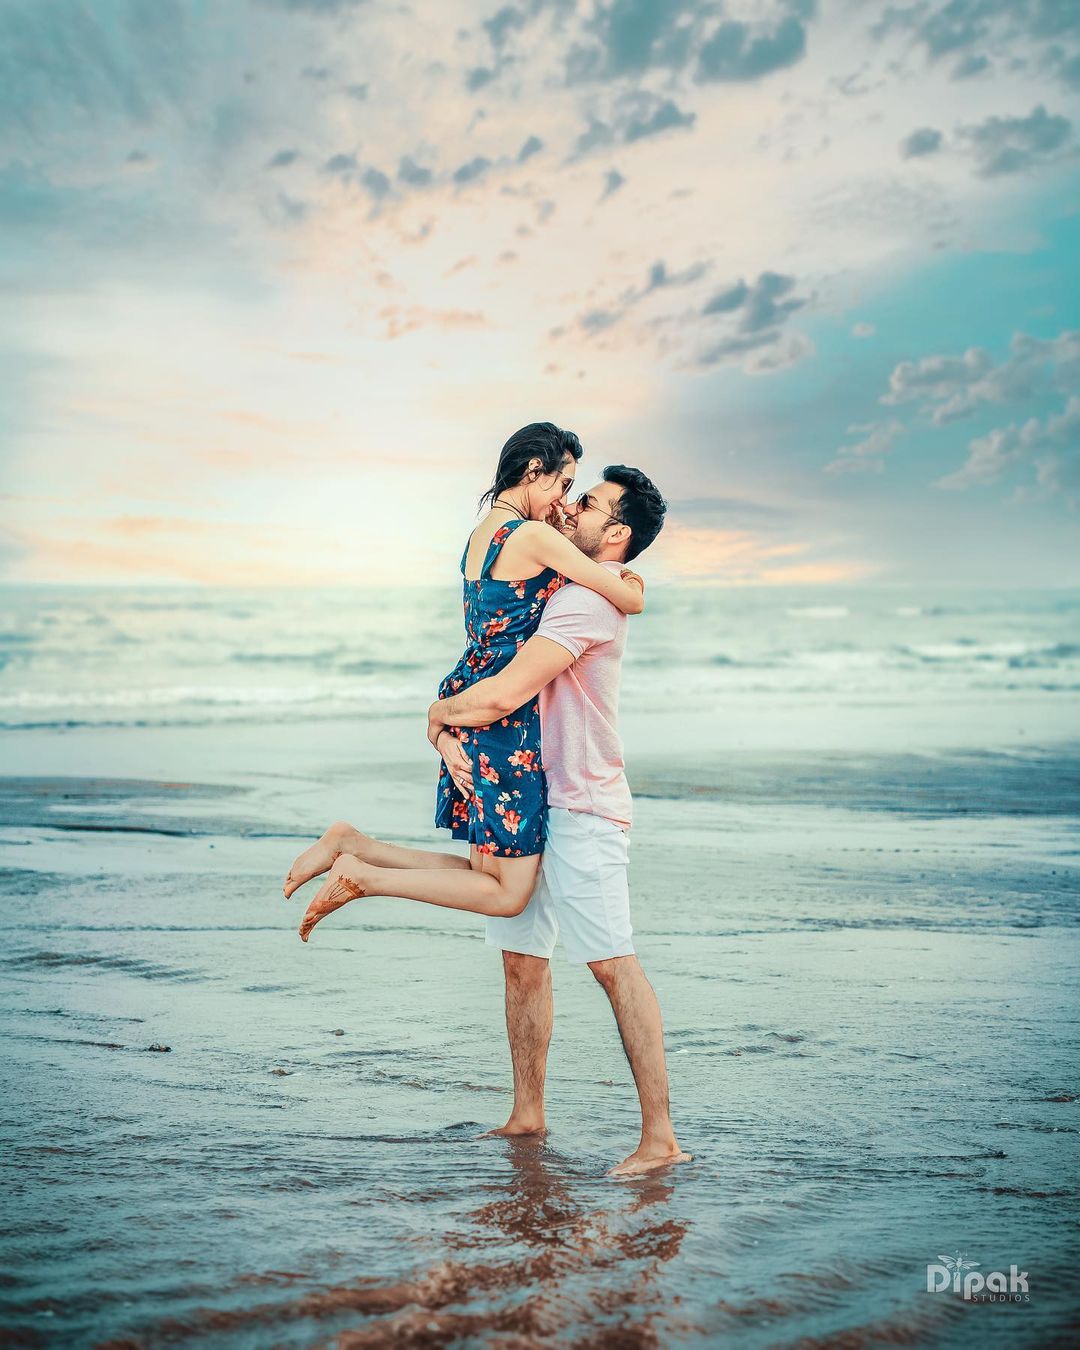 Beach Couple Photoshoot Wedabout 2876